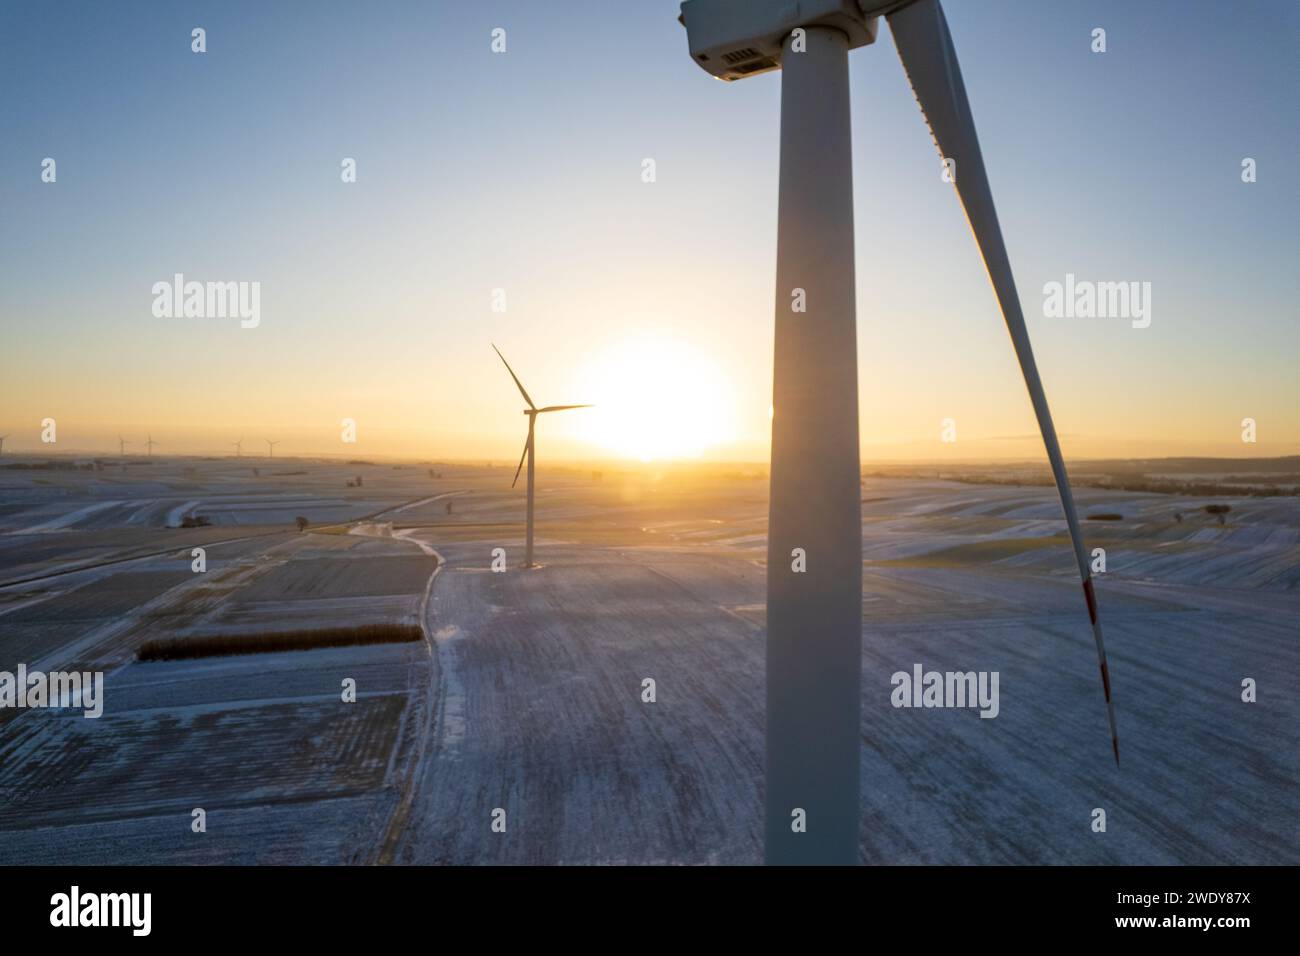 Aerial view of wind turbine field Stock Photo